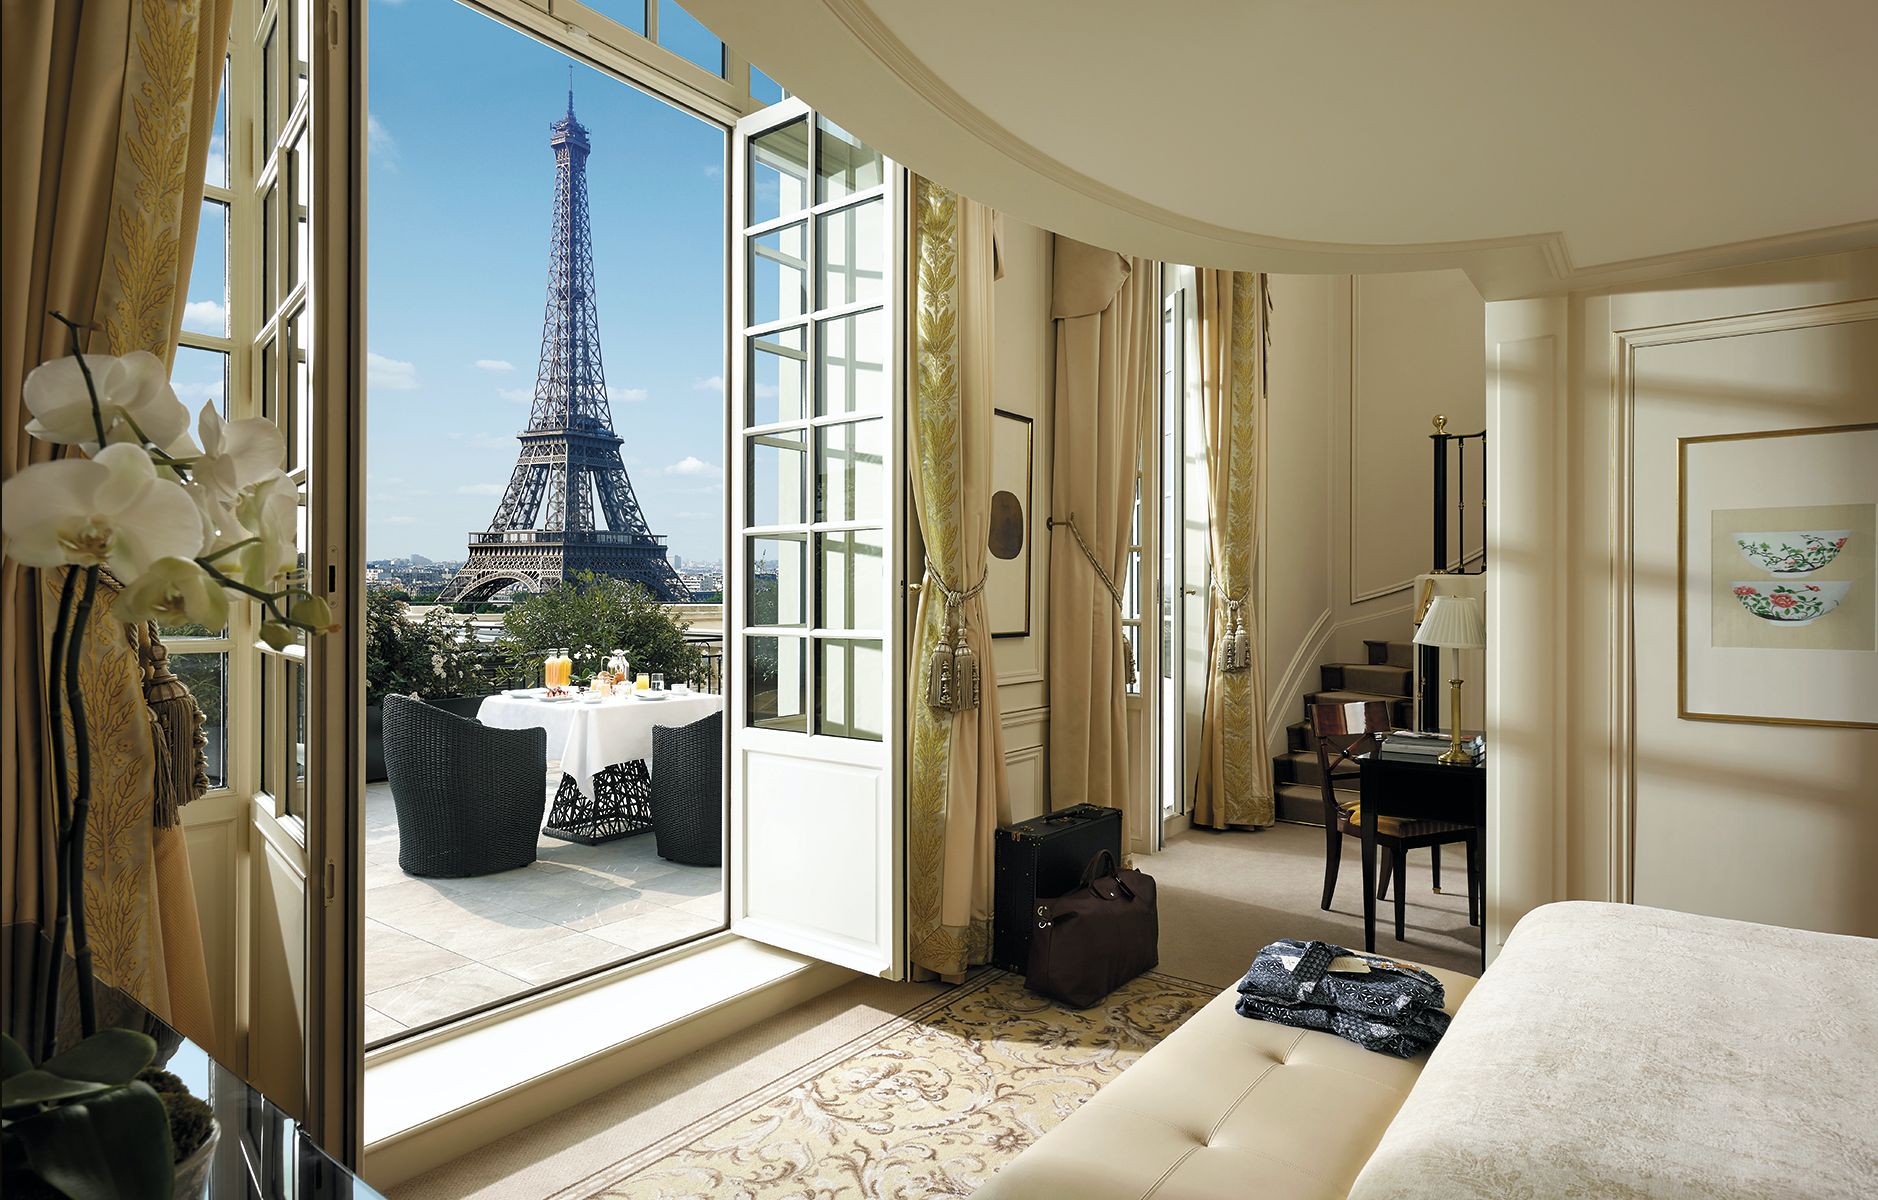 Shangri-La Paris Hotel: Review